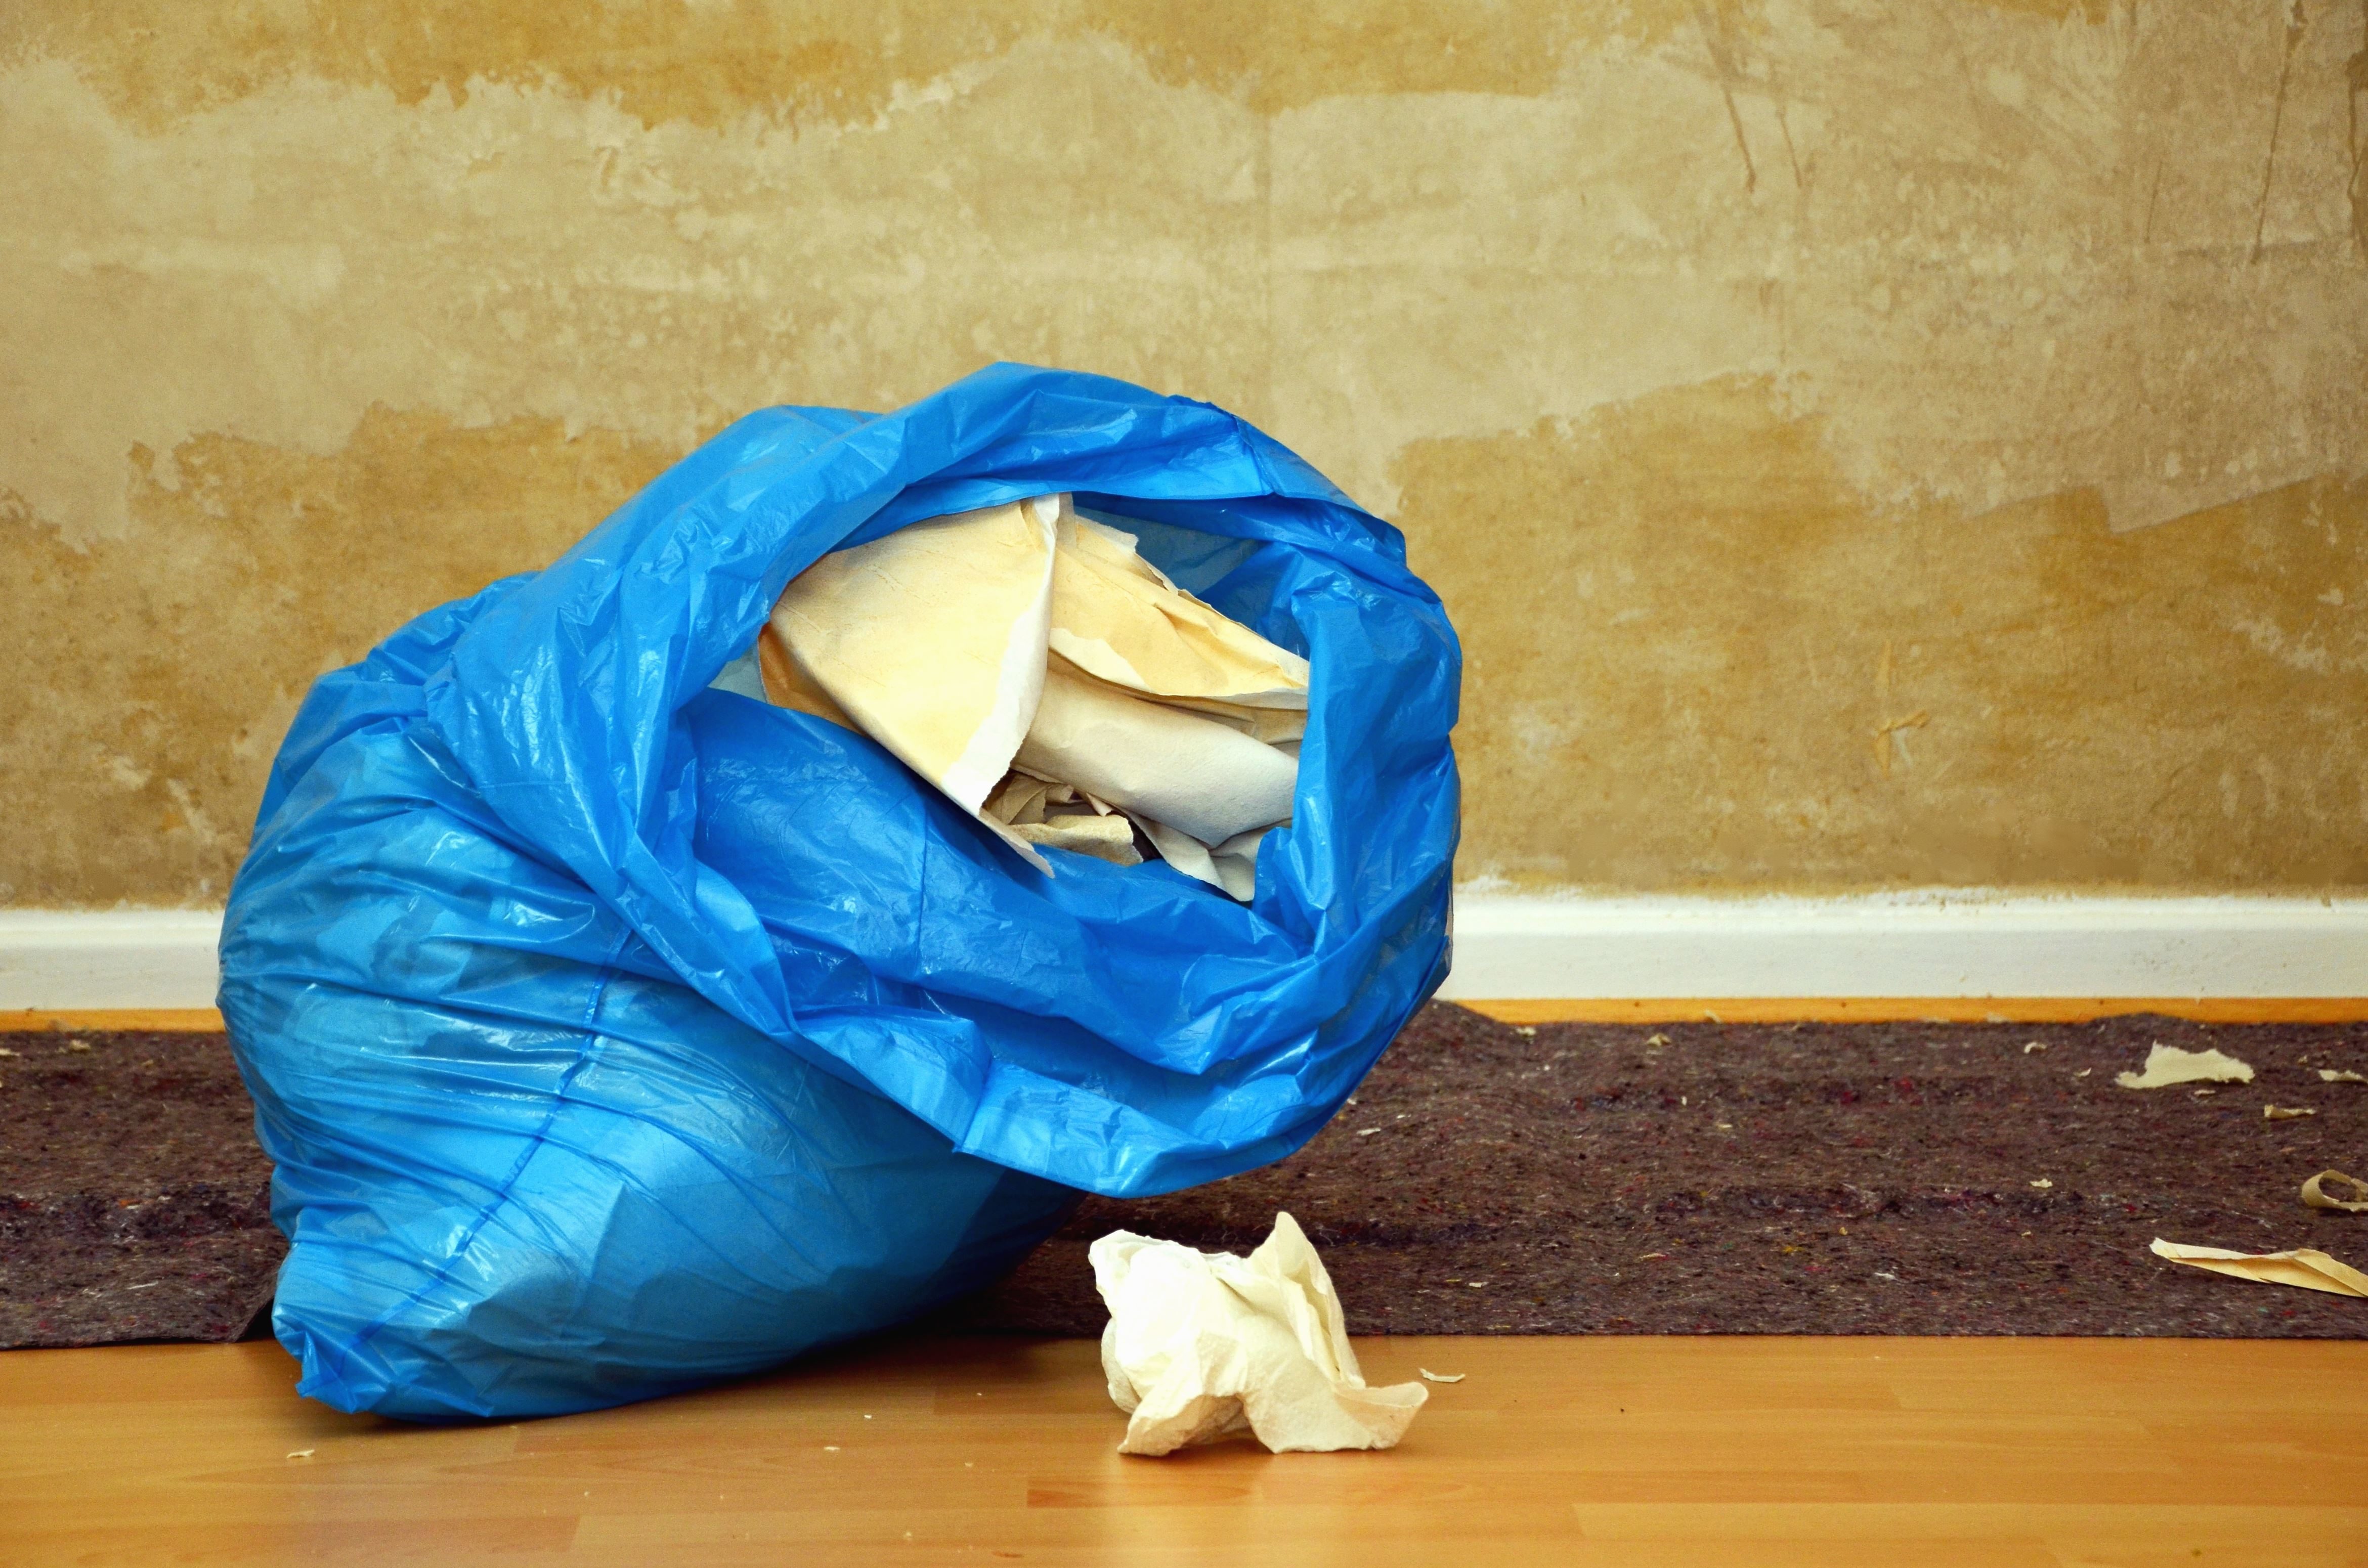 400+ Free Trash Can & Garbage Images - Pixabay